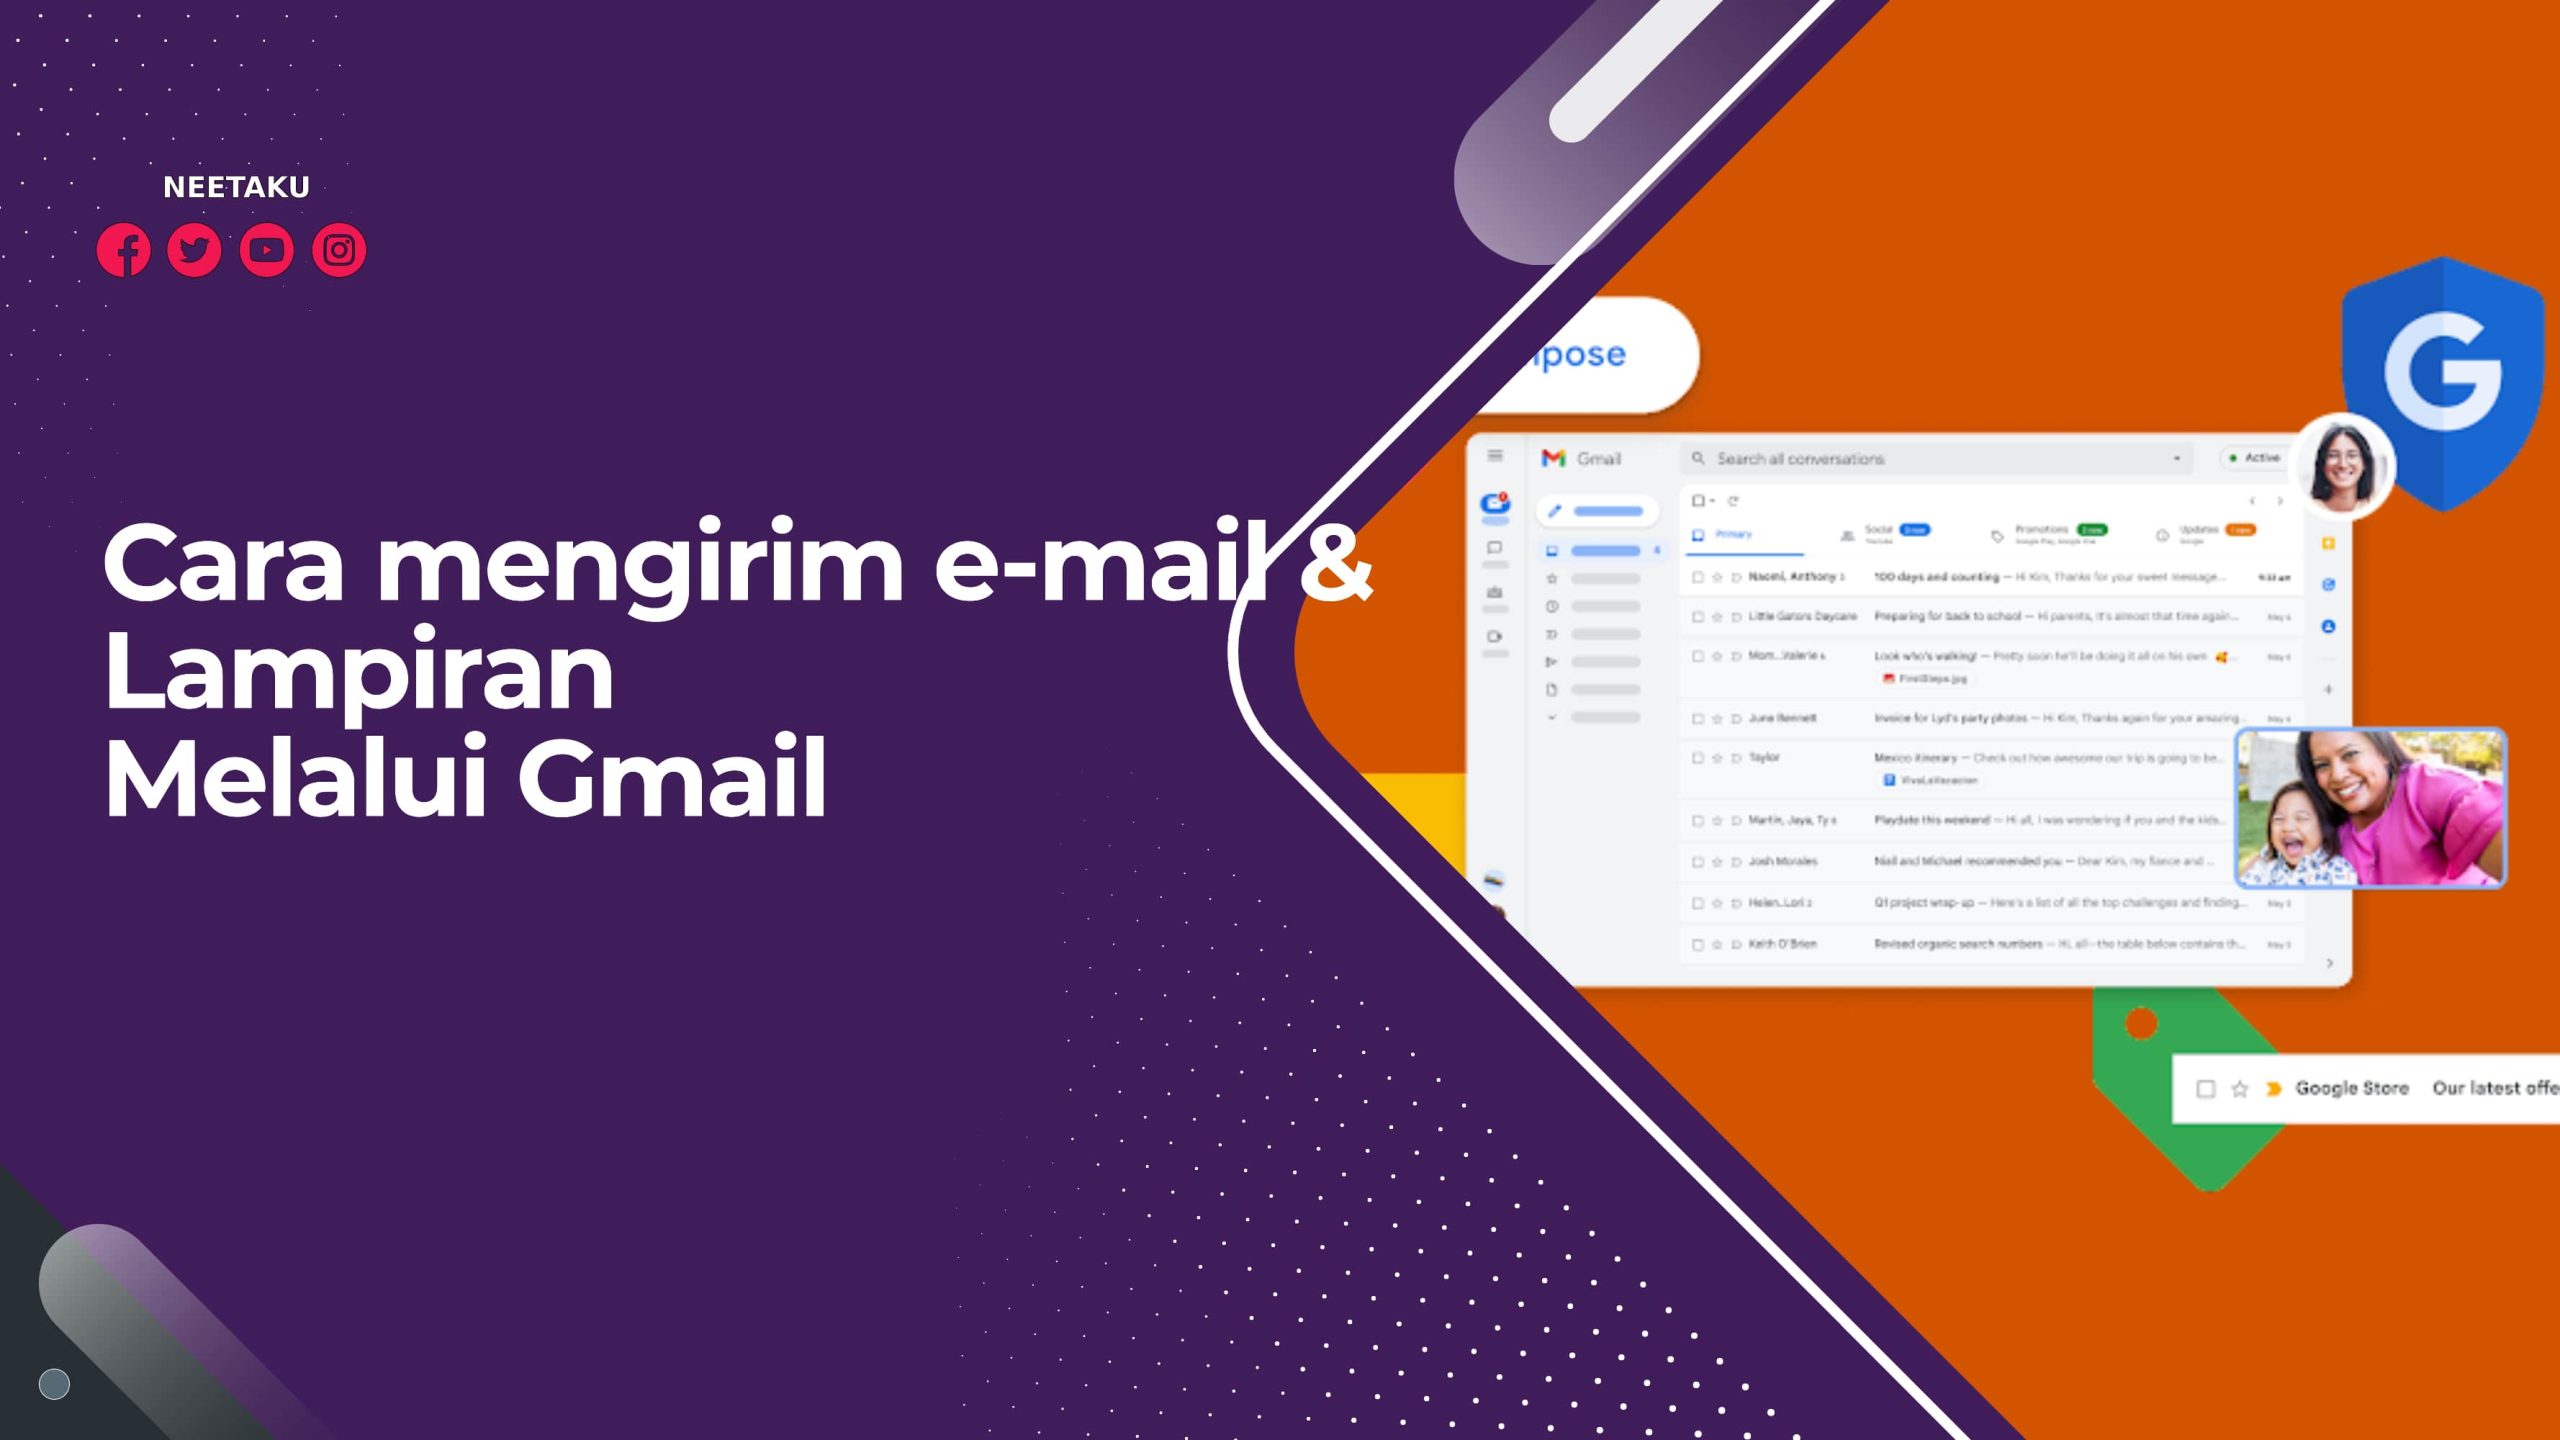 Cara mengirim e-mail & lampiran melalui Gmail